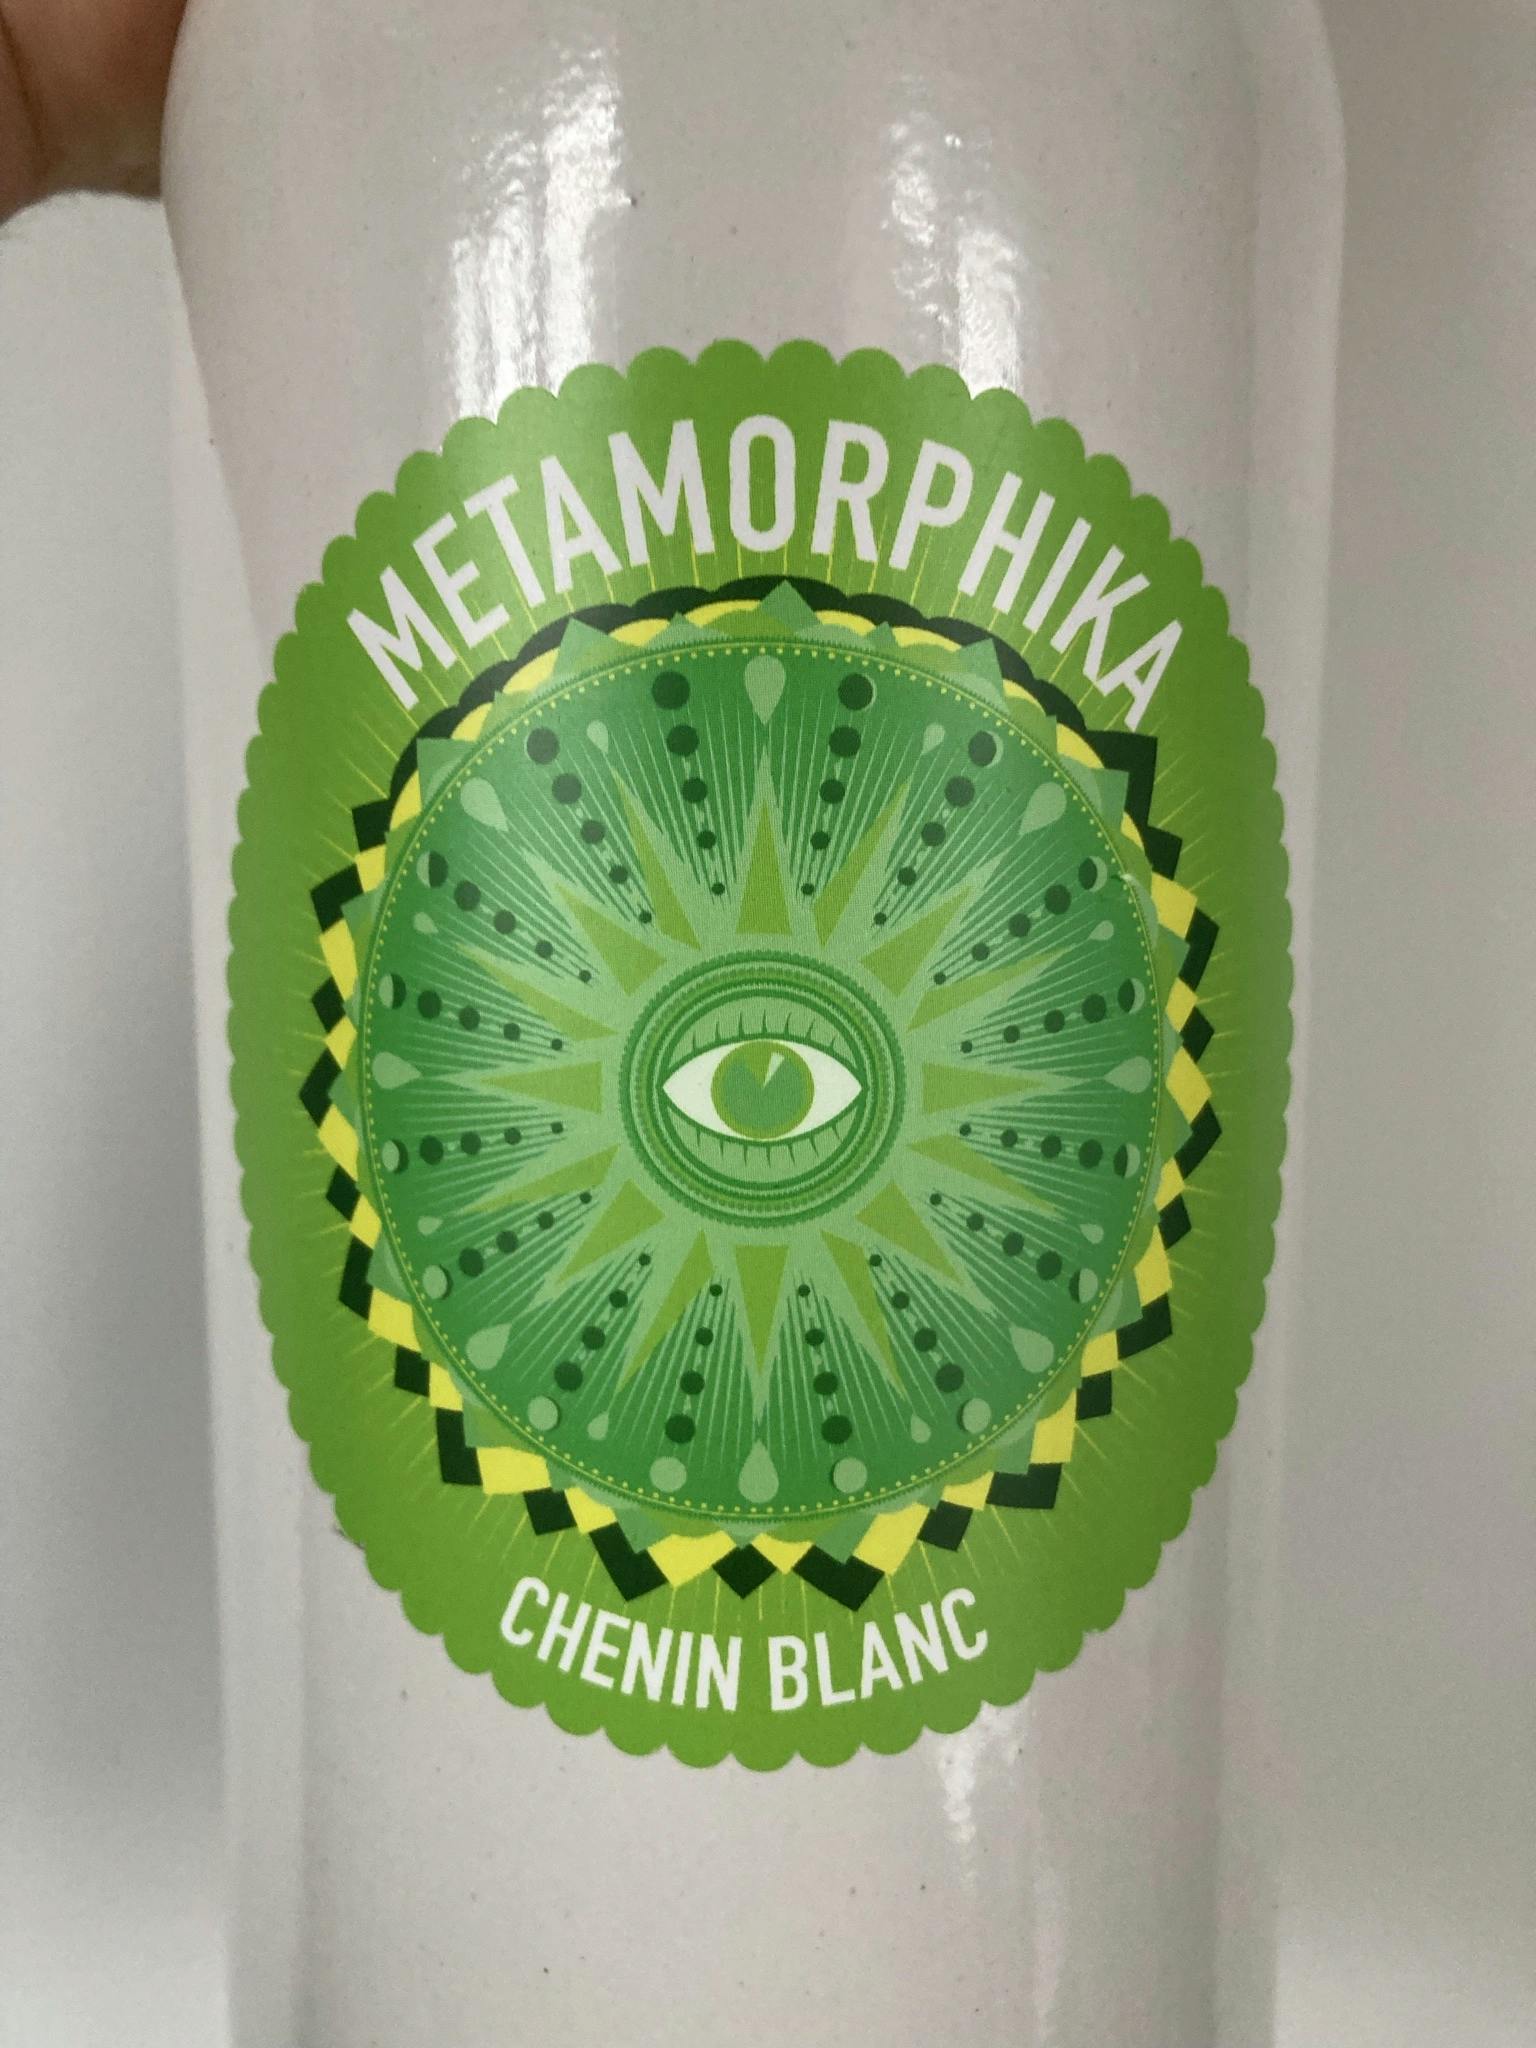 Costador Metamorphika Chenin Blanc 2017